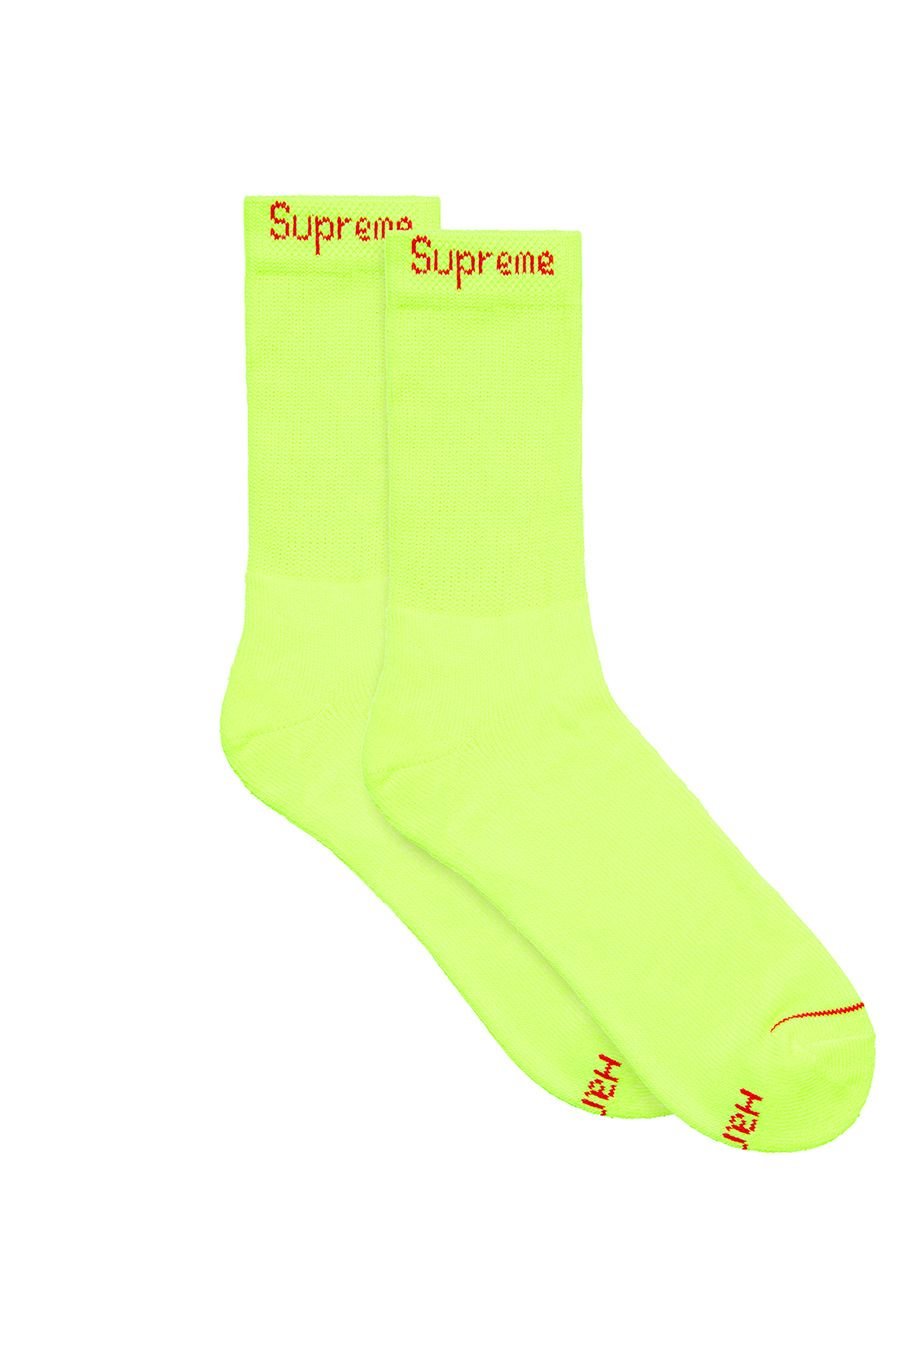 Supreme Hanes Crew Socks ソックス 靴下 白 2足 02 - ソックス